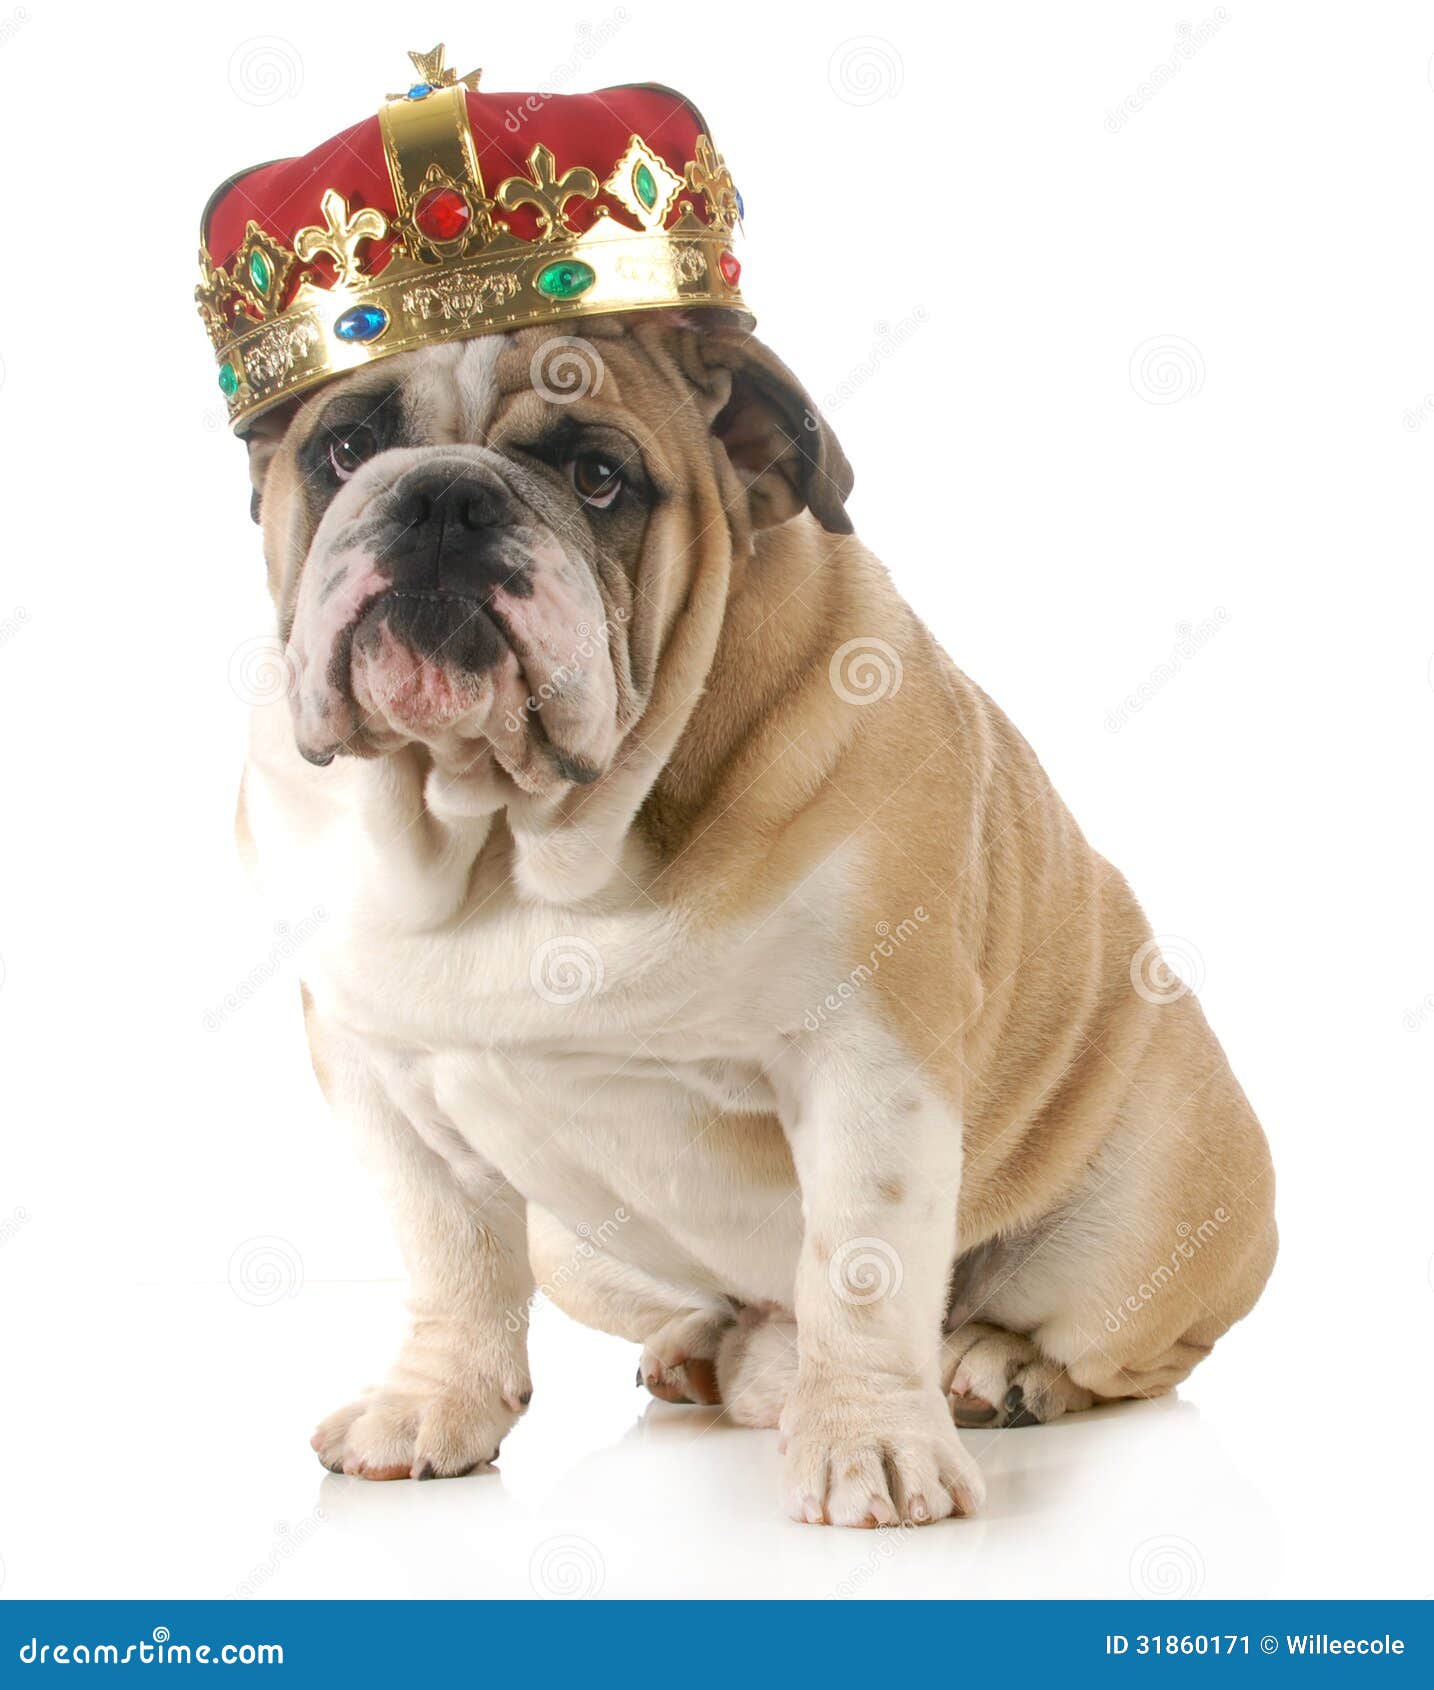 dog-wearing-crown-english-bulldog-king-s-sitting-looking-viewer-isolated-white-background-31860171.jpg